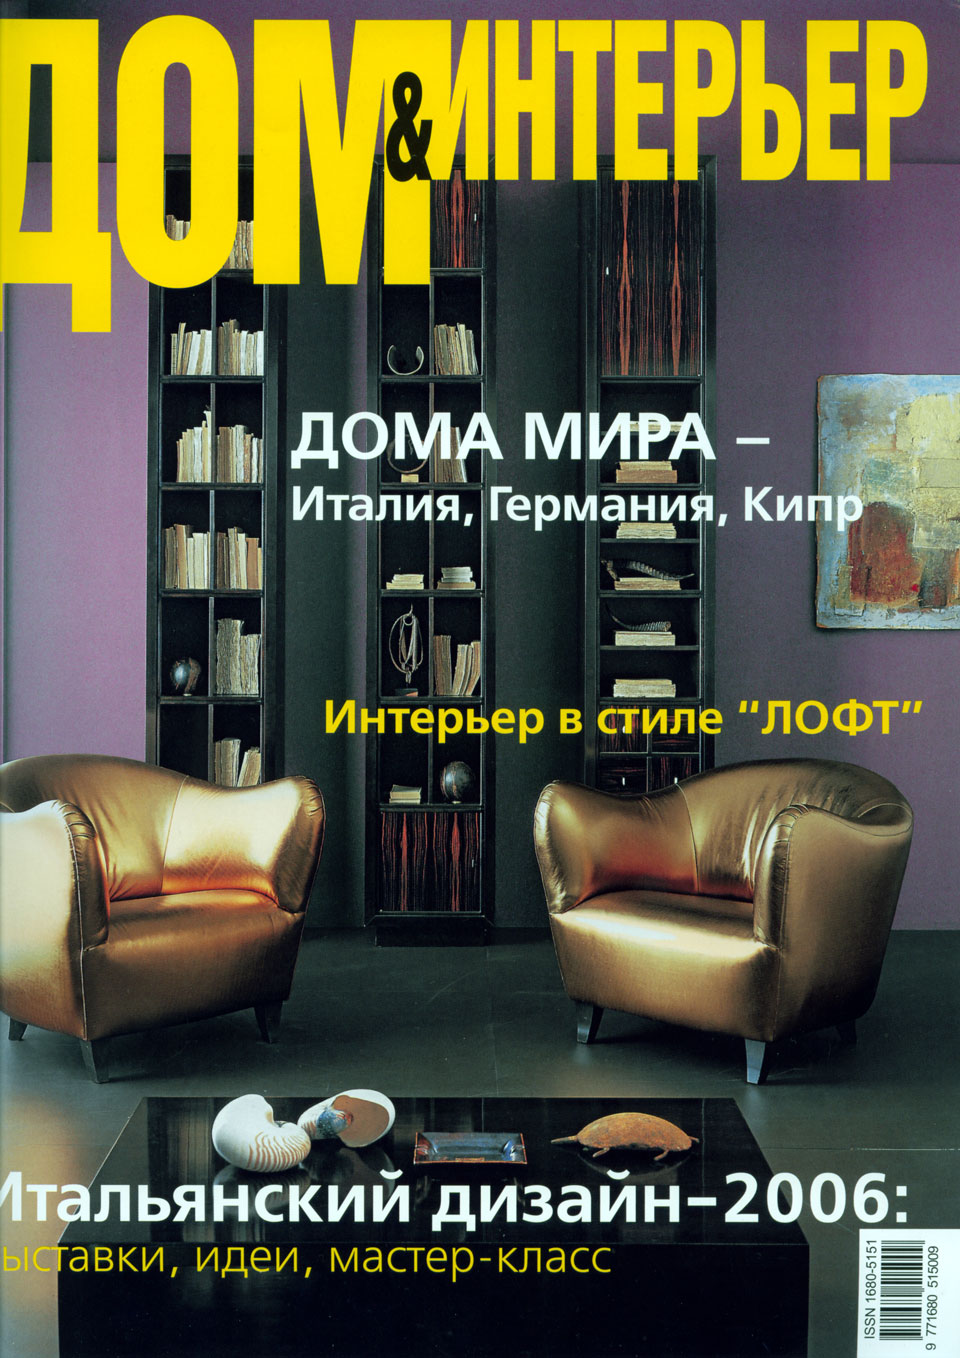 dom&interieur-VI-2006